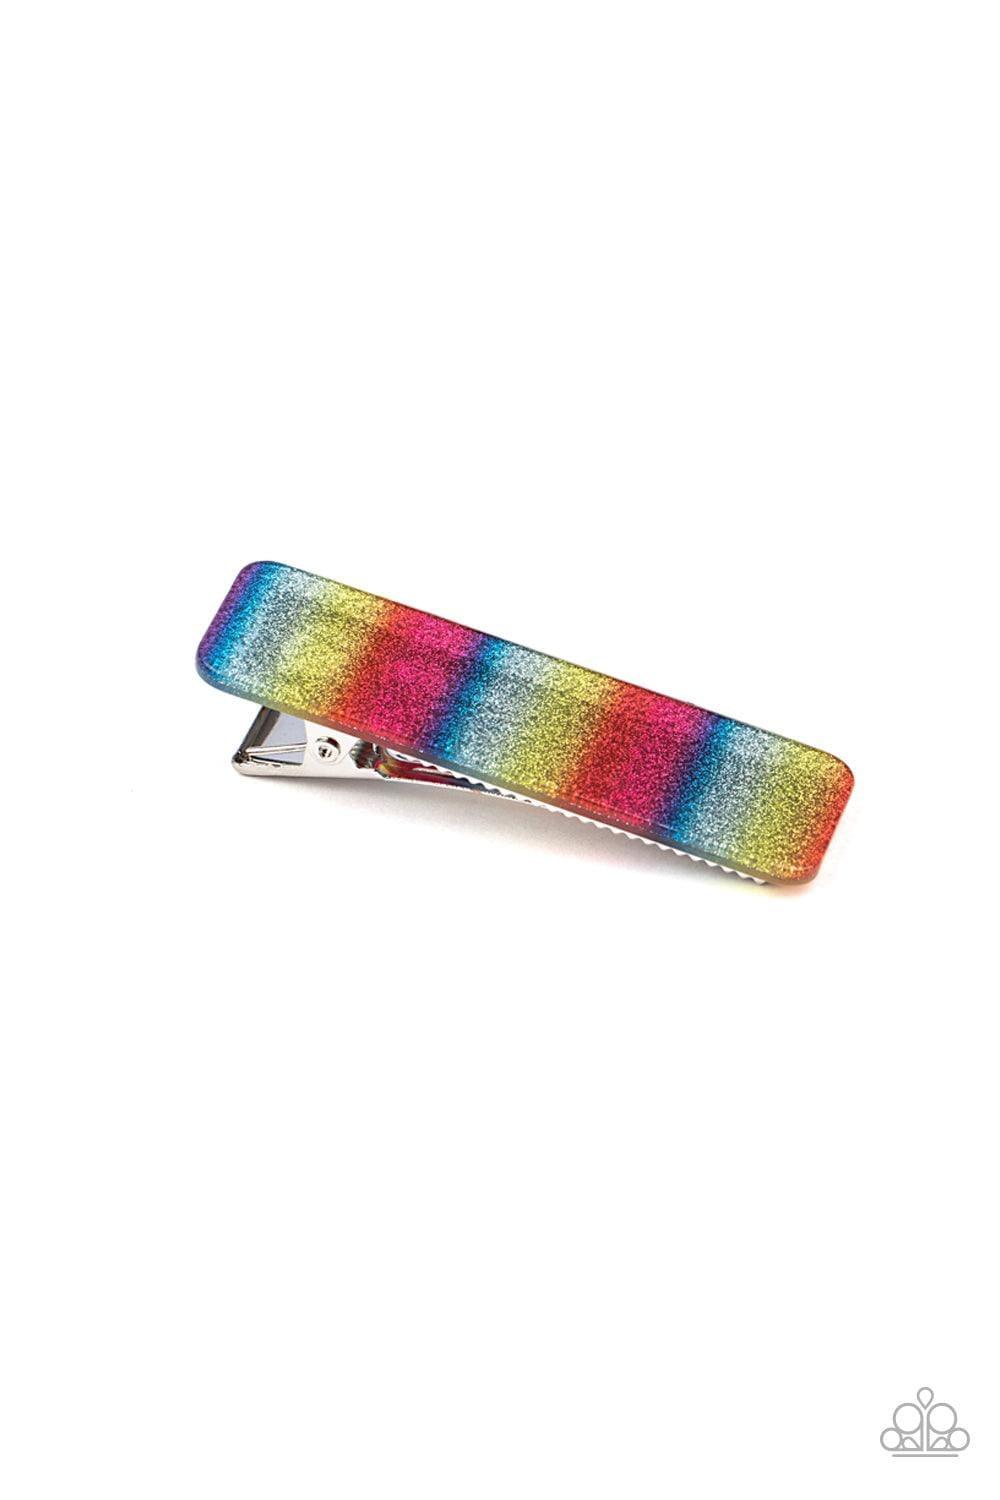 Paparazzi Accessories - Stellar Rainbows - Multicolor Hair Clip - Bling by JessieK